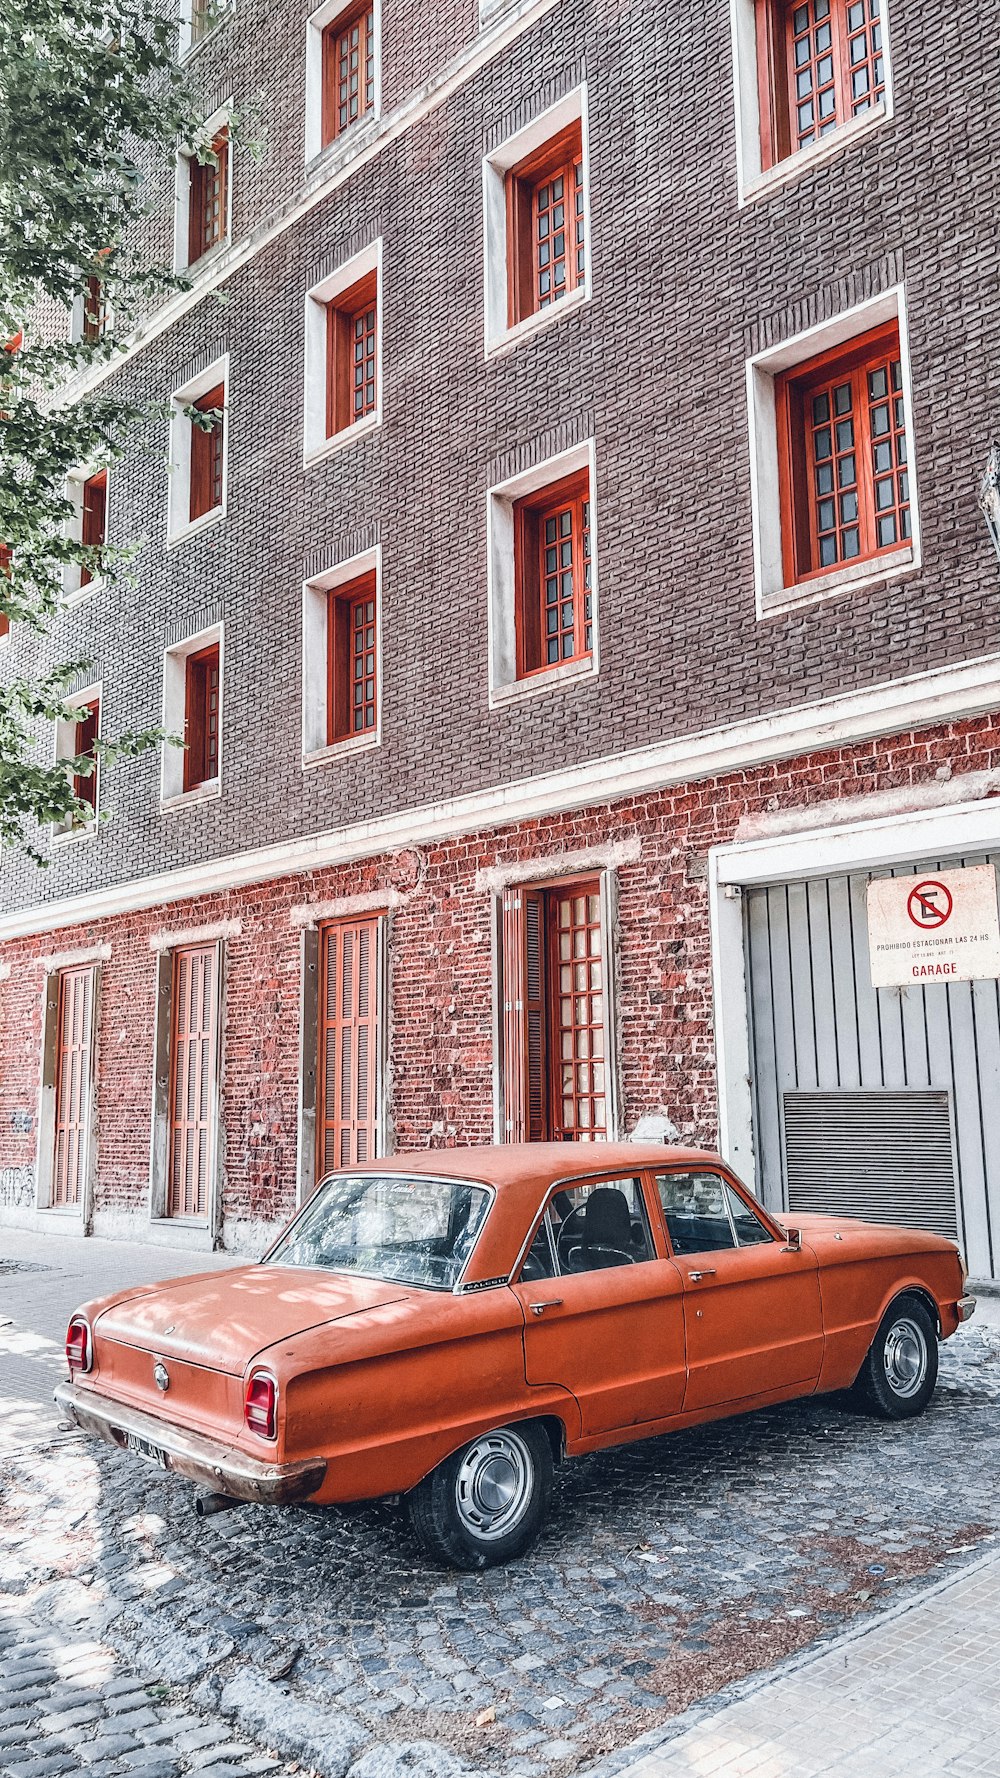 Un coche naranja aparcado frente a un edificio de ladrillo